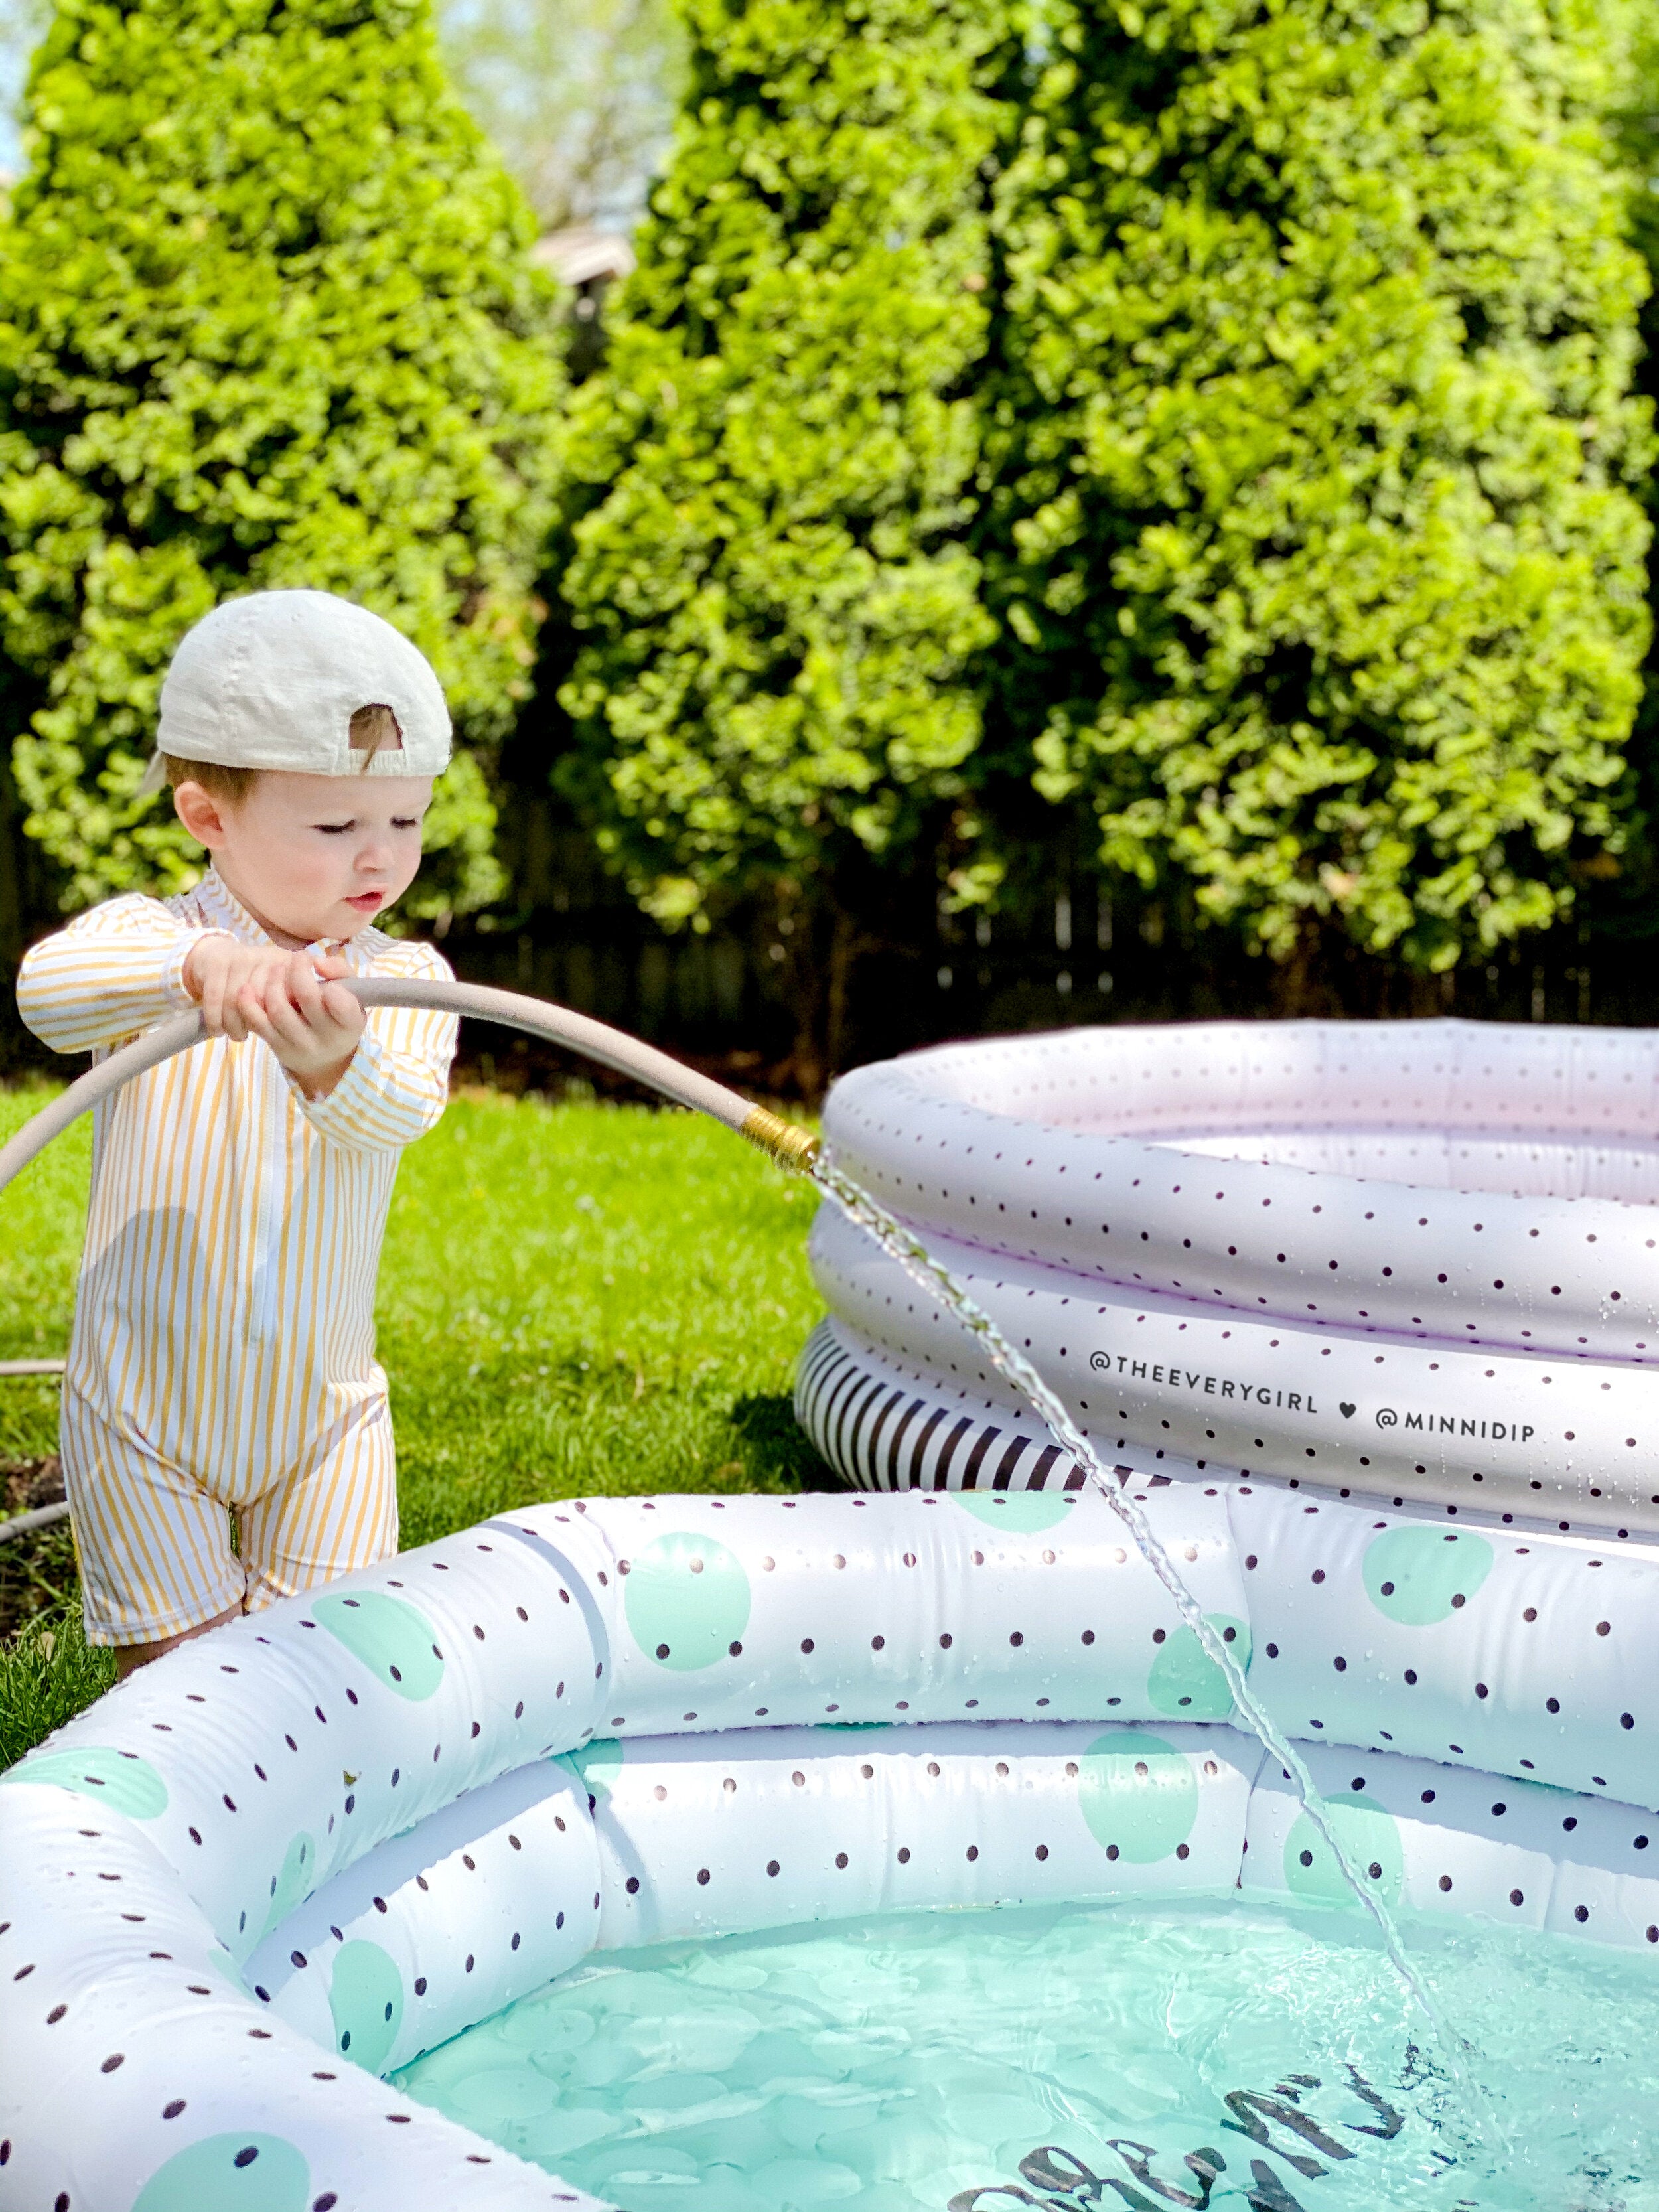 the MINNIDIP x EVERYMOM Minni-Minni Luxe Inflatable Pool